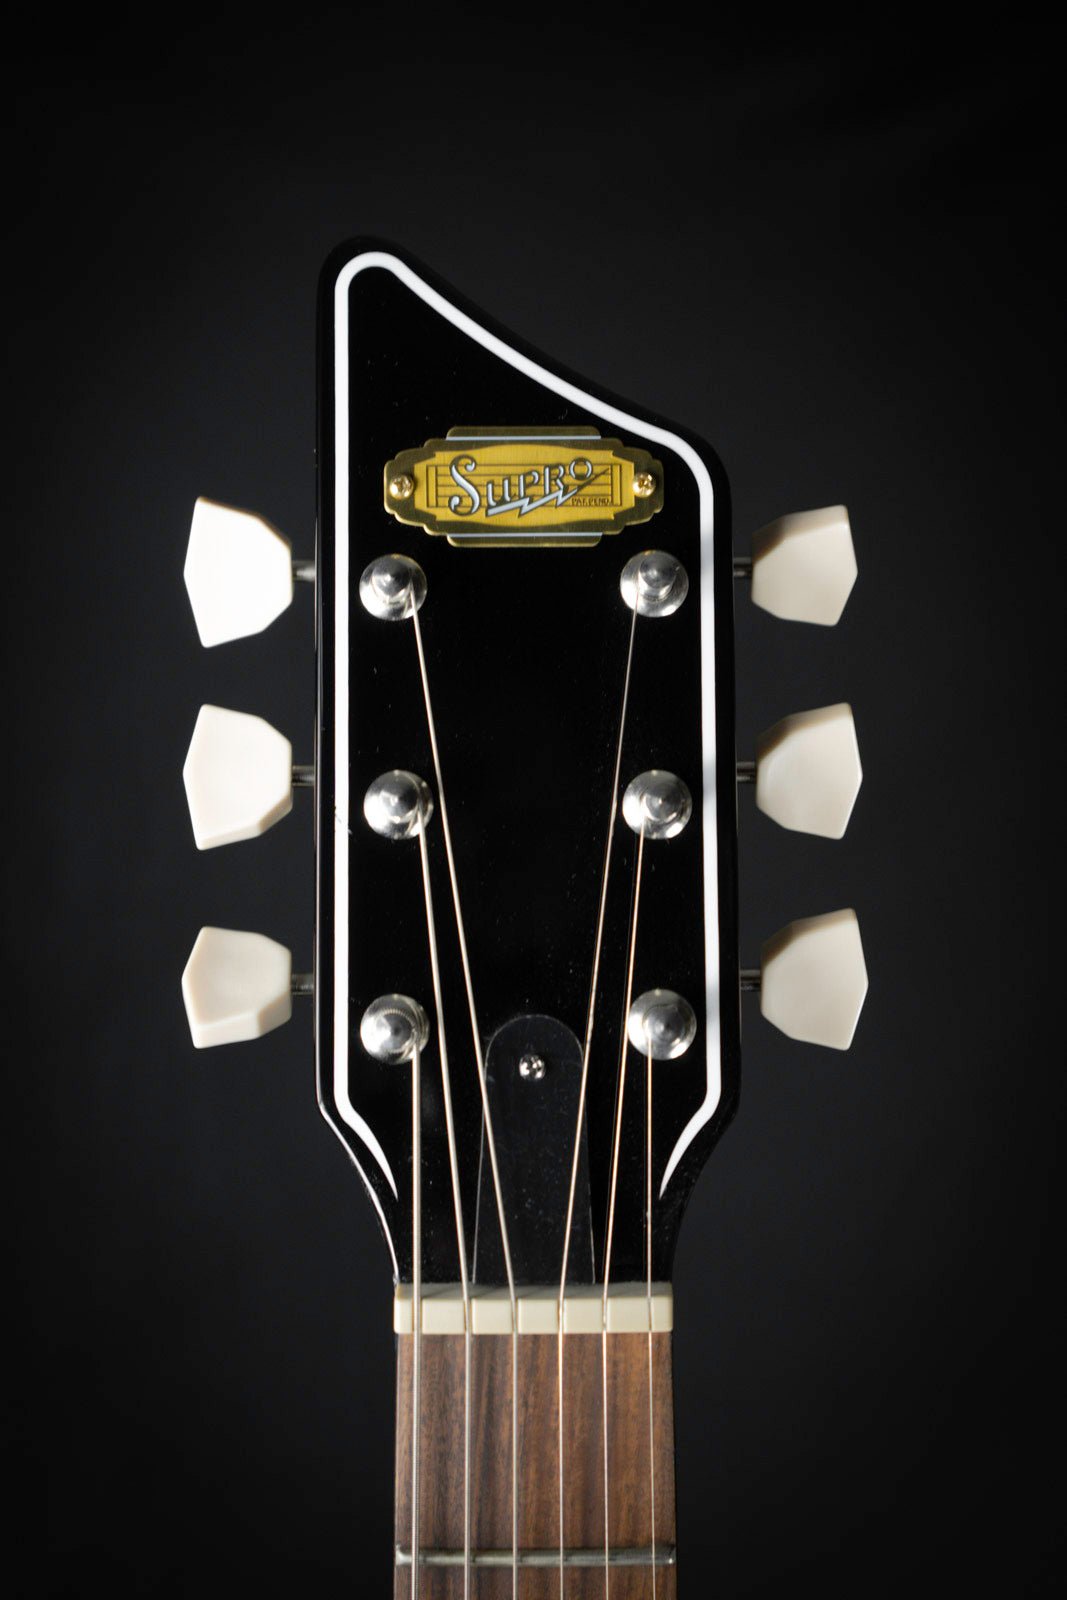 Supro Ozark Reissue Electric Guitar - Electric Guitars - Supro